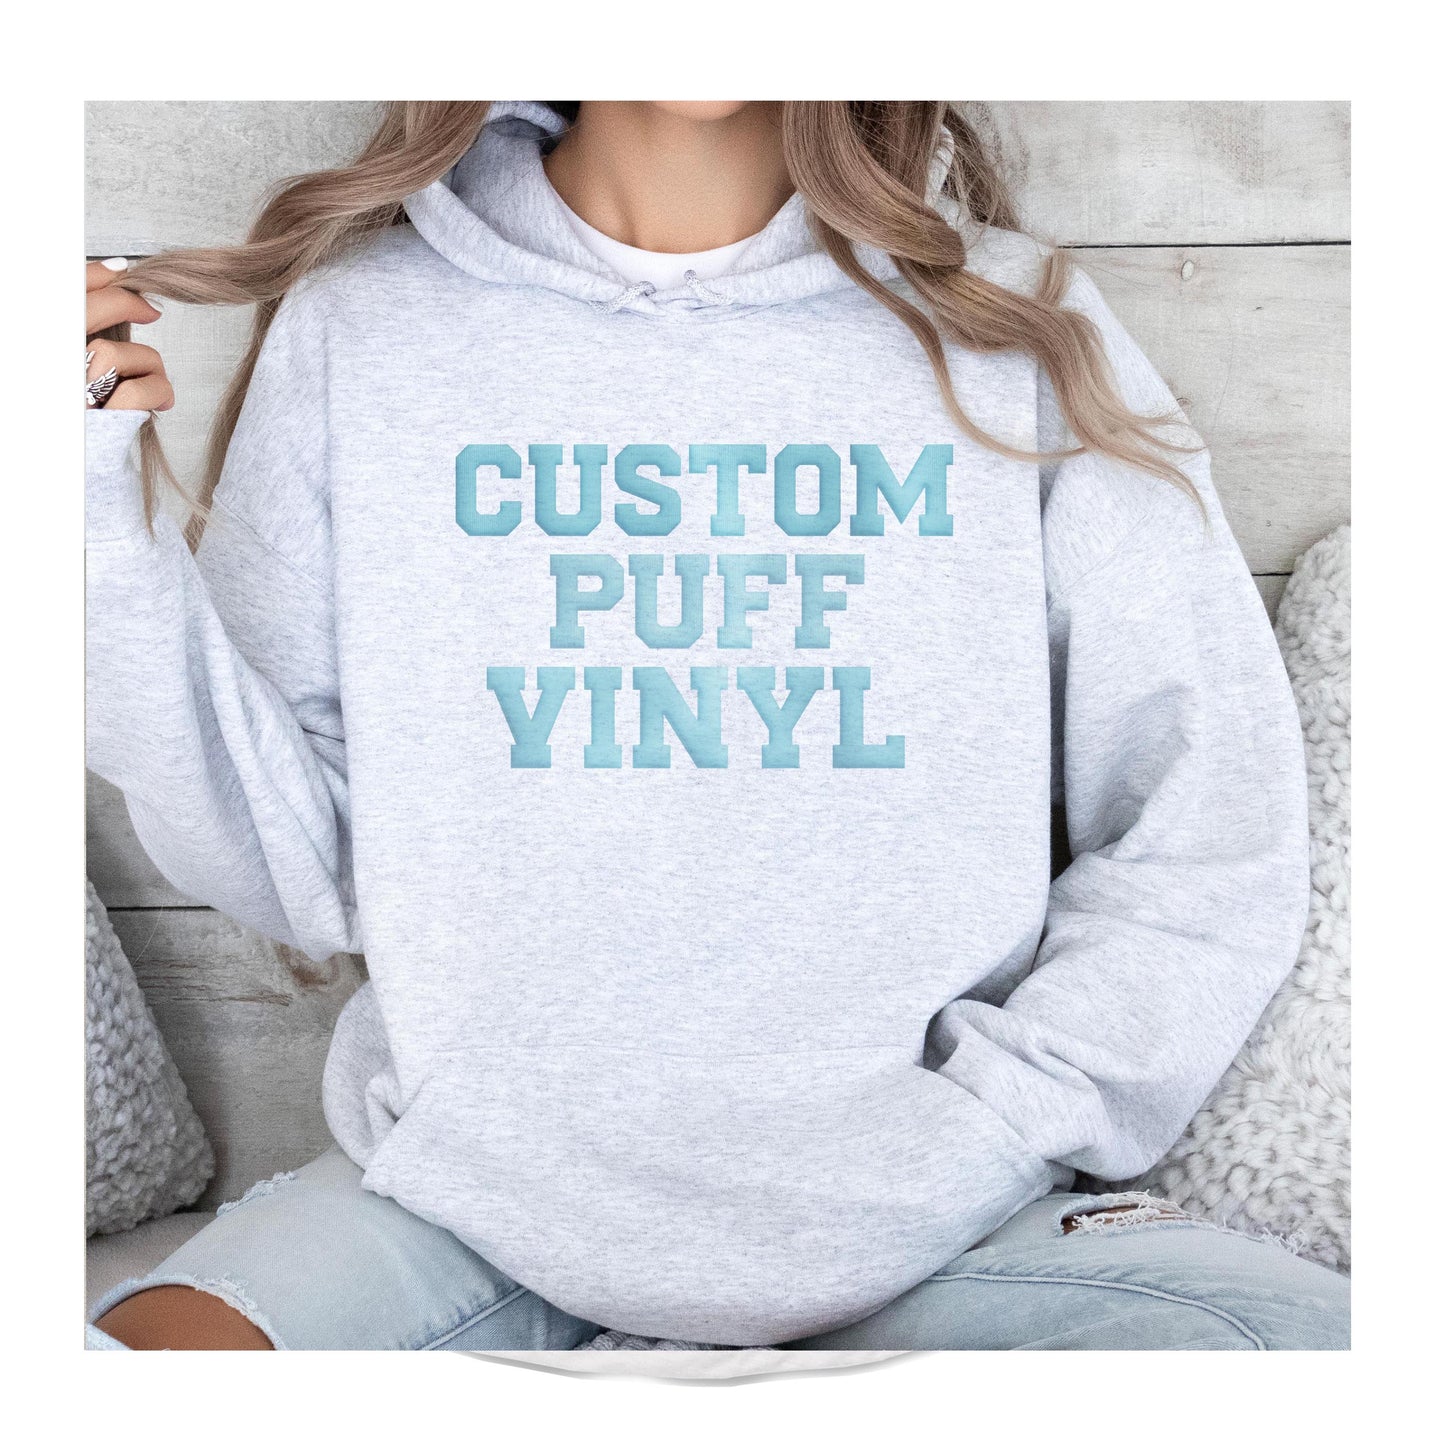 Custom Puff Vinyl Pre-order